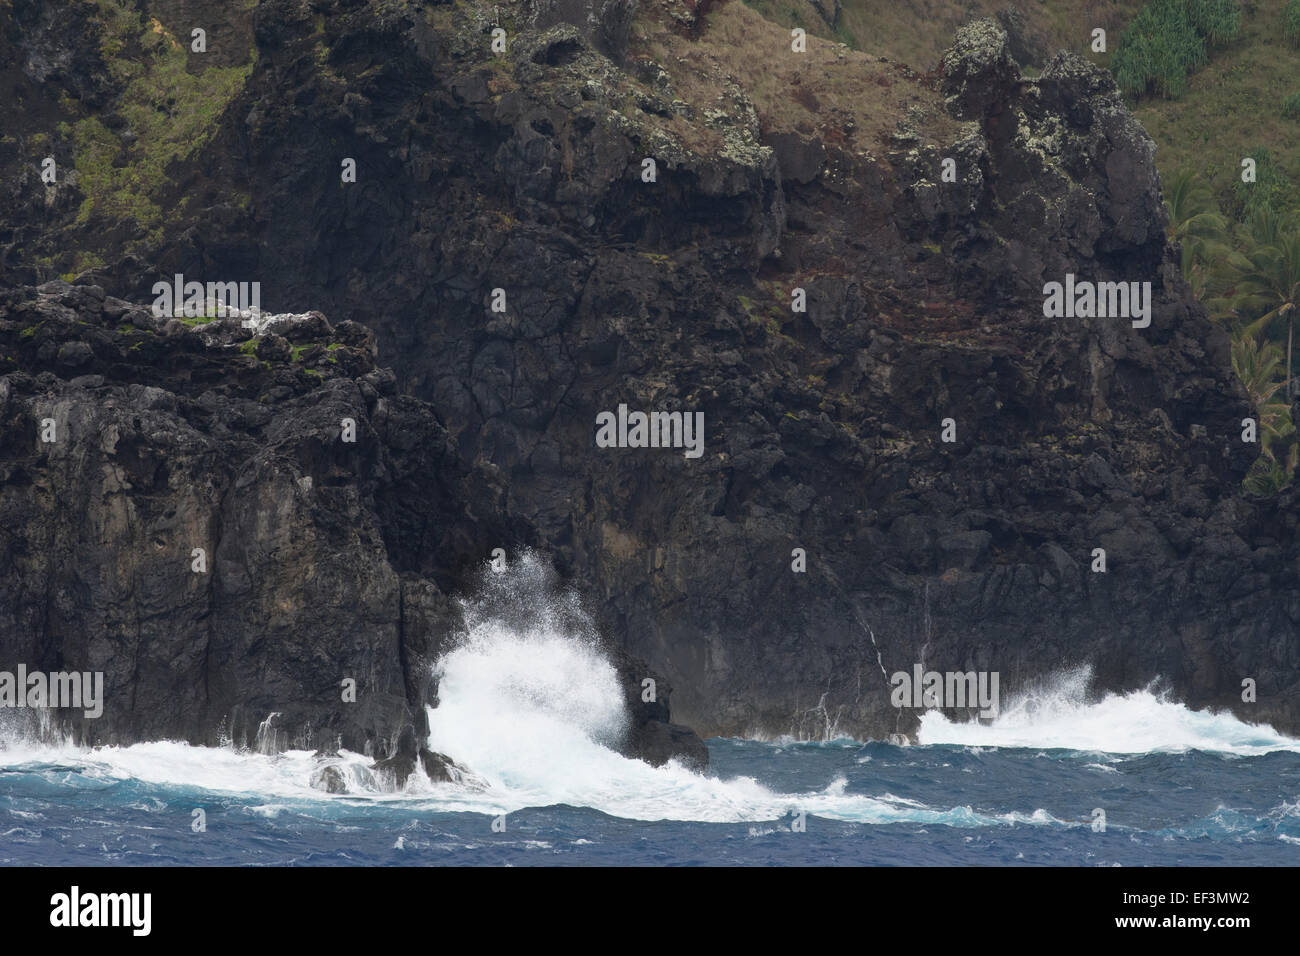 Islas Pitcairn, la Isla de Pitcairn. Vista costera de la escarpada costa volcánica de Pitcairn. El mar embravecido. Foto de stock